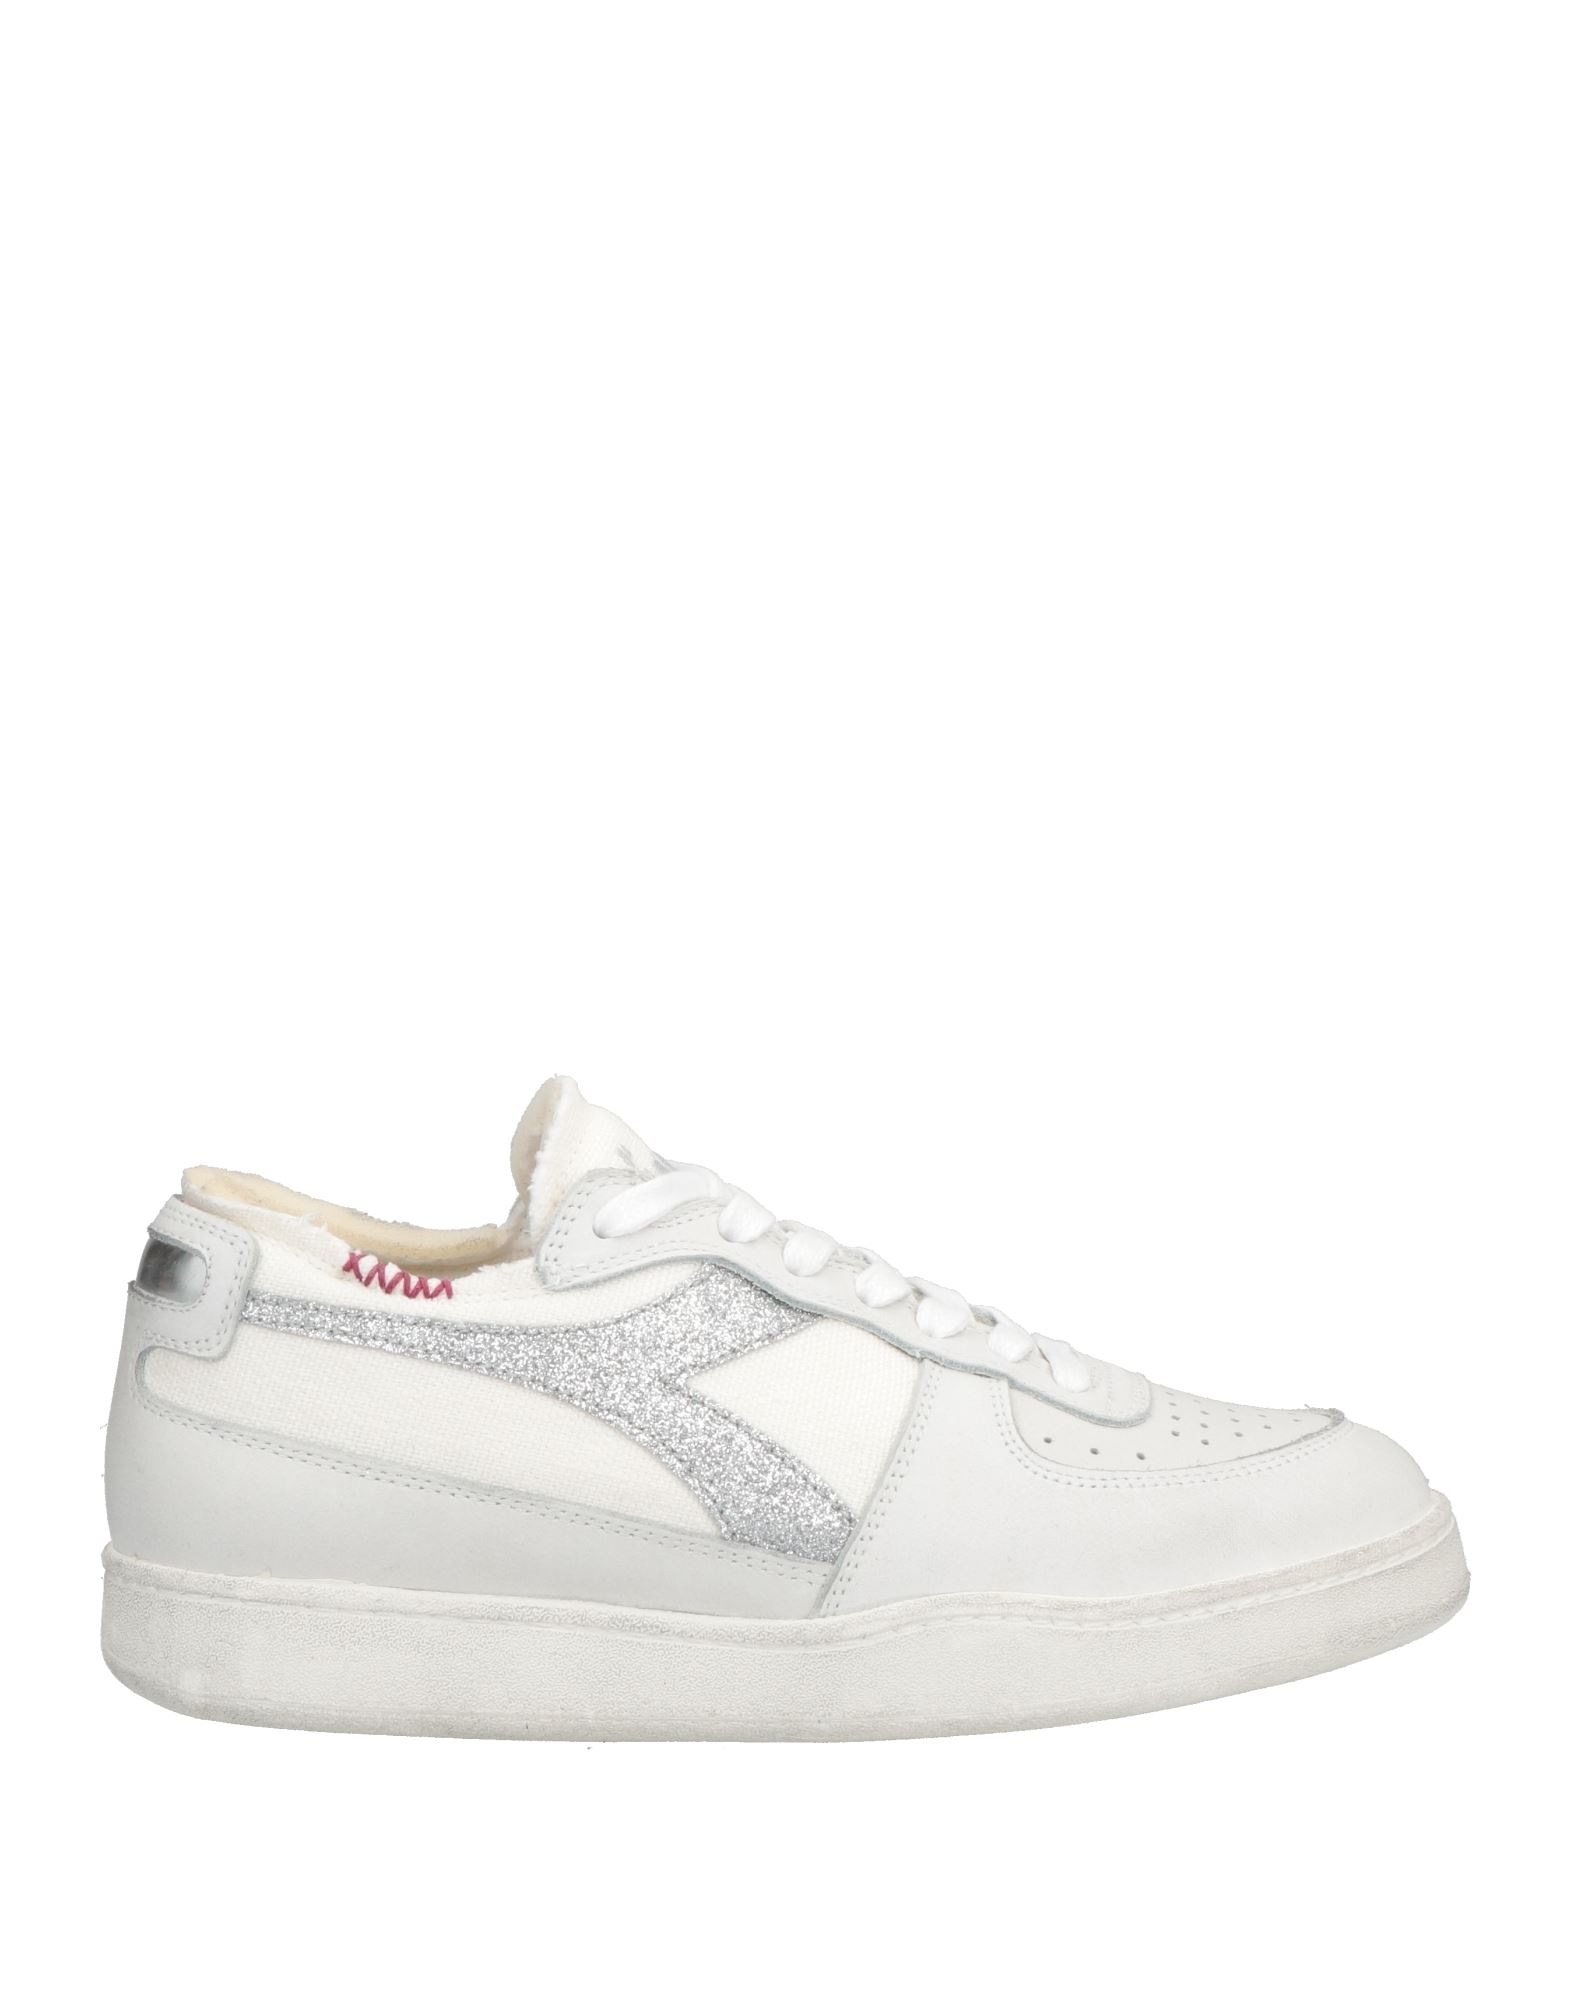 Diadora Sneakers In Light Grey